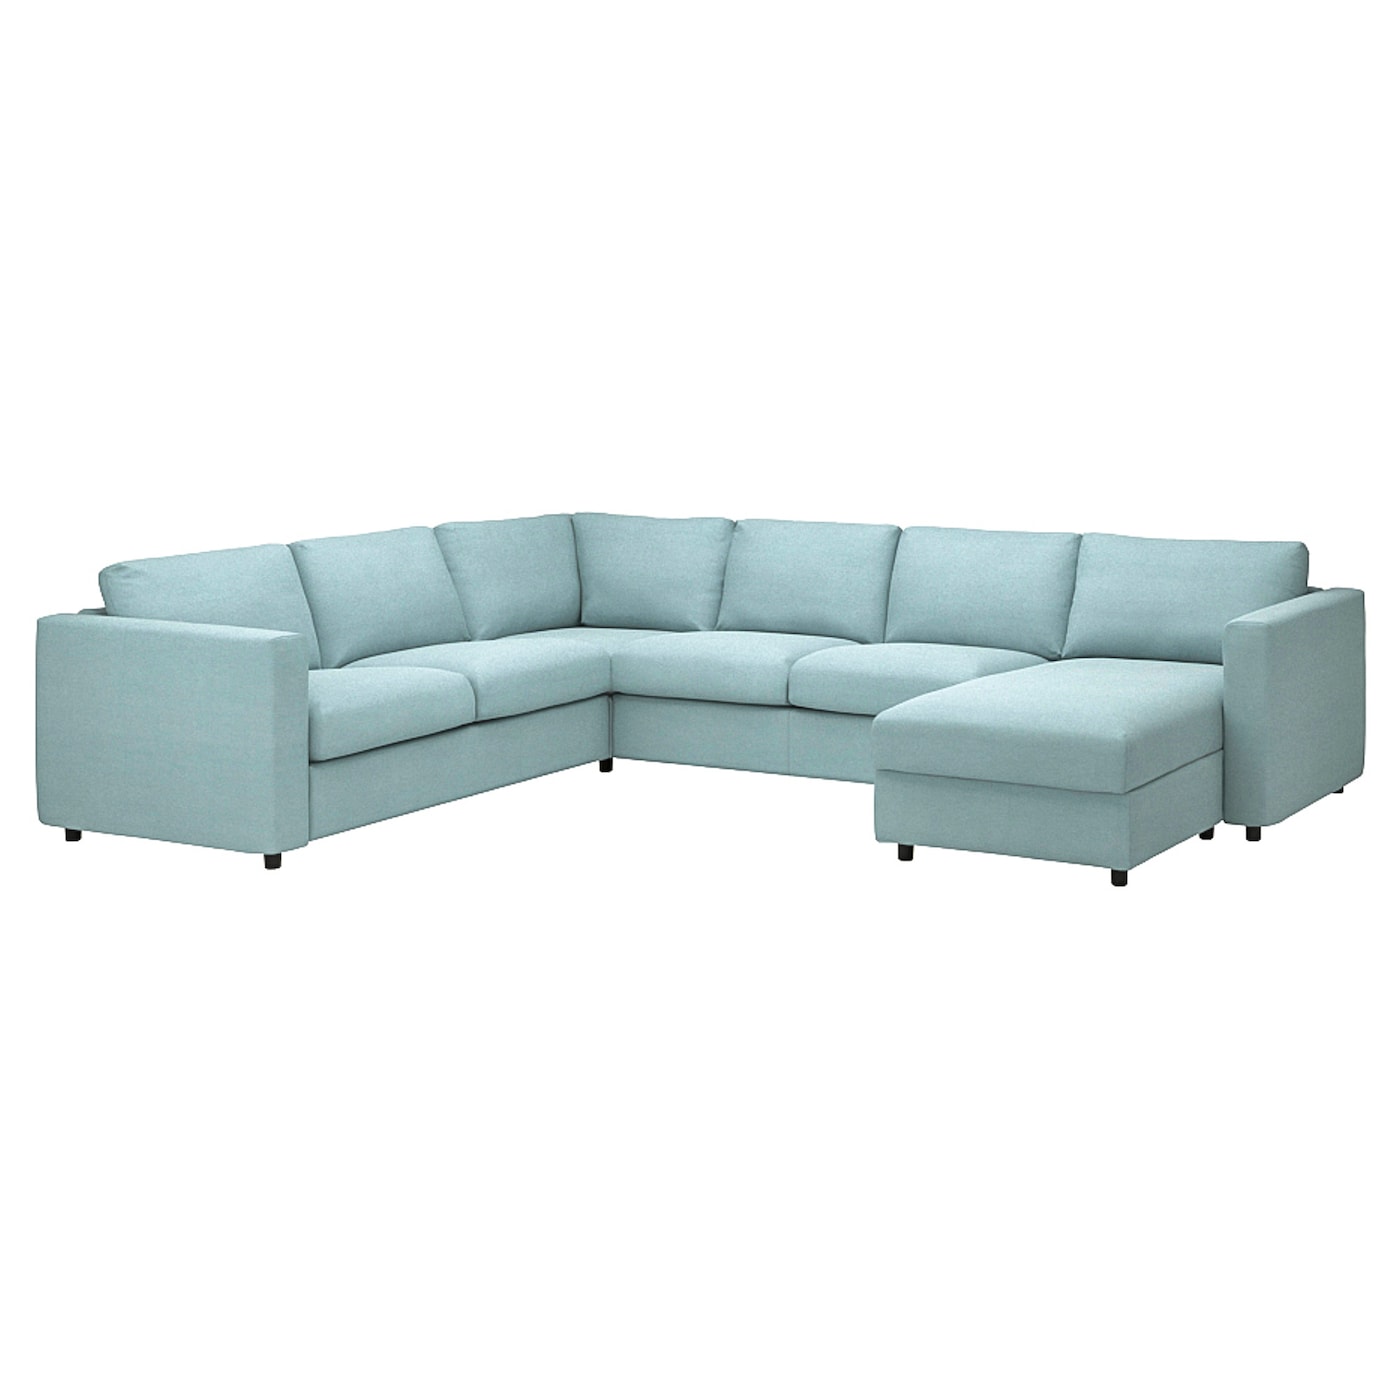 ВИМЛЕ Диван угловой, 5-местный. диван+диван, с диваном/Saxemara светло-синий VIMLE IKEA цена и фото